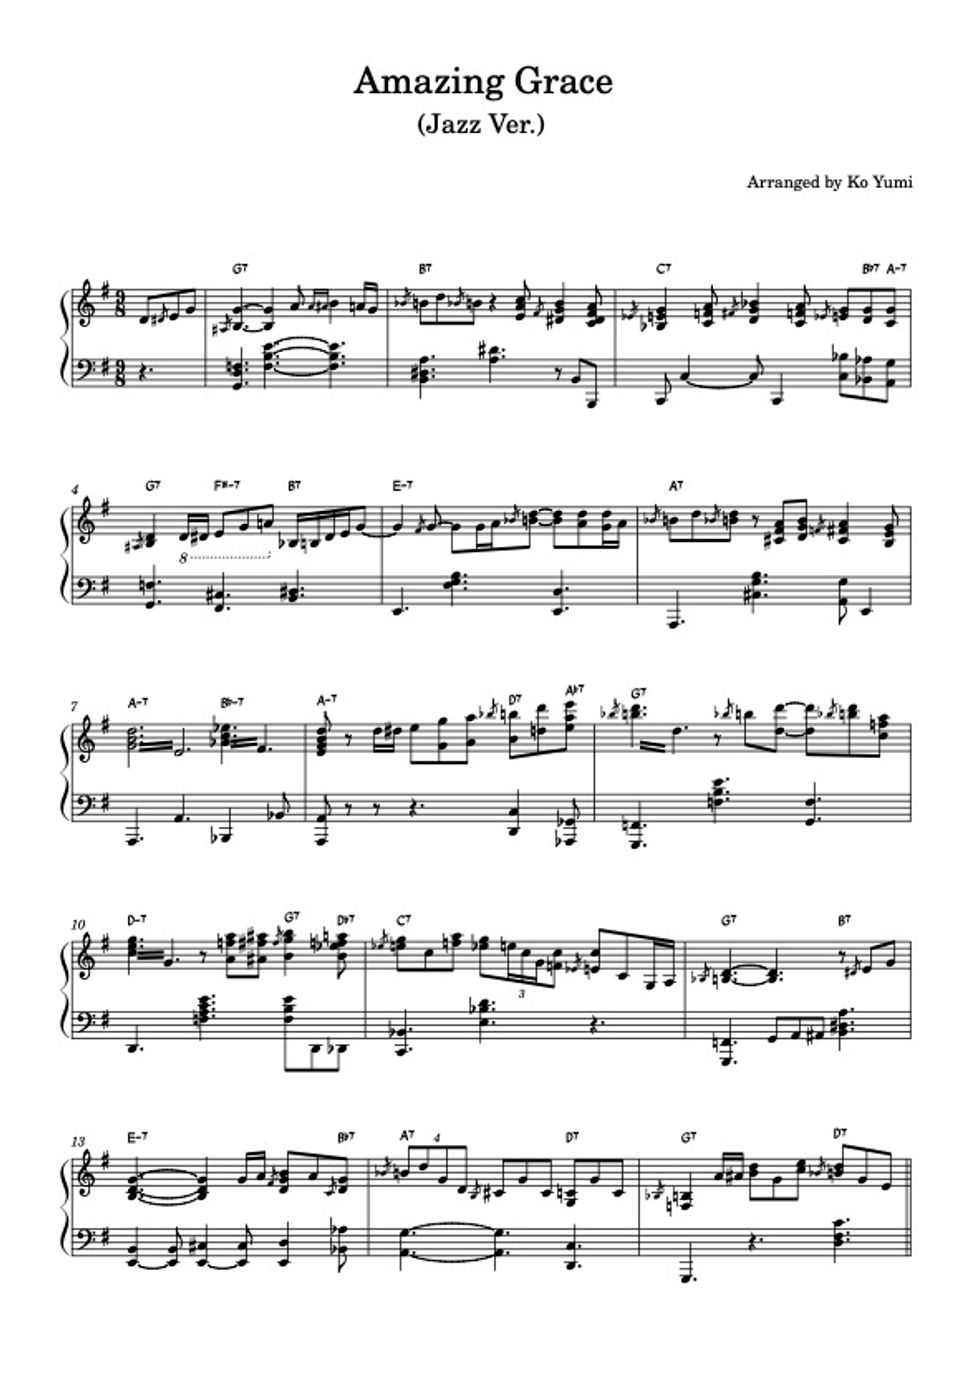 Traditional American Melody - Amazing Grace (Jazz Ver.(Blues)) by KoYumi Music